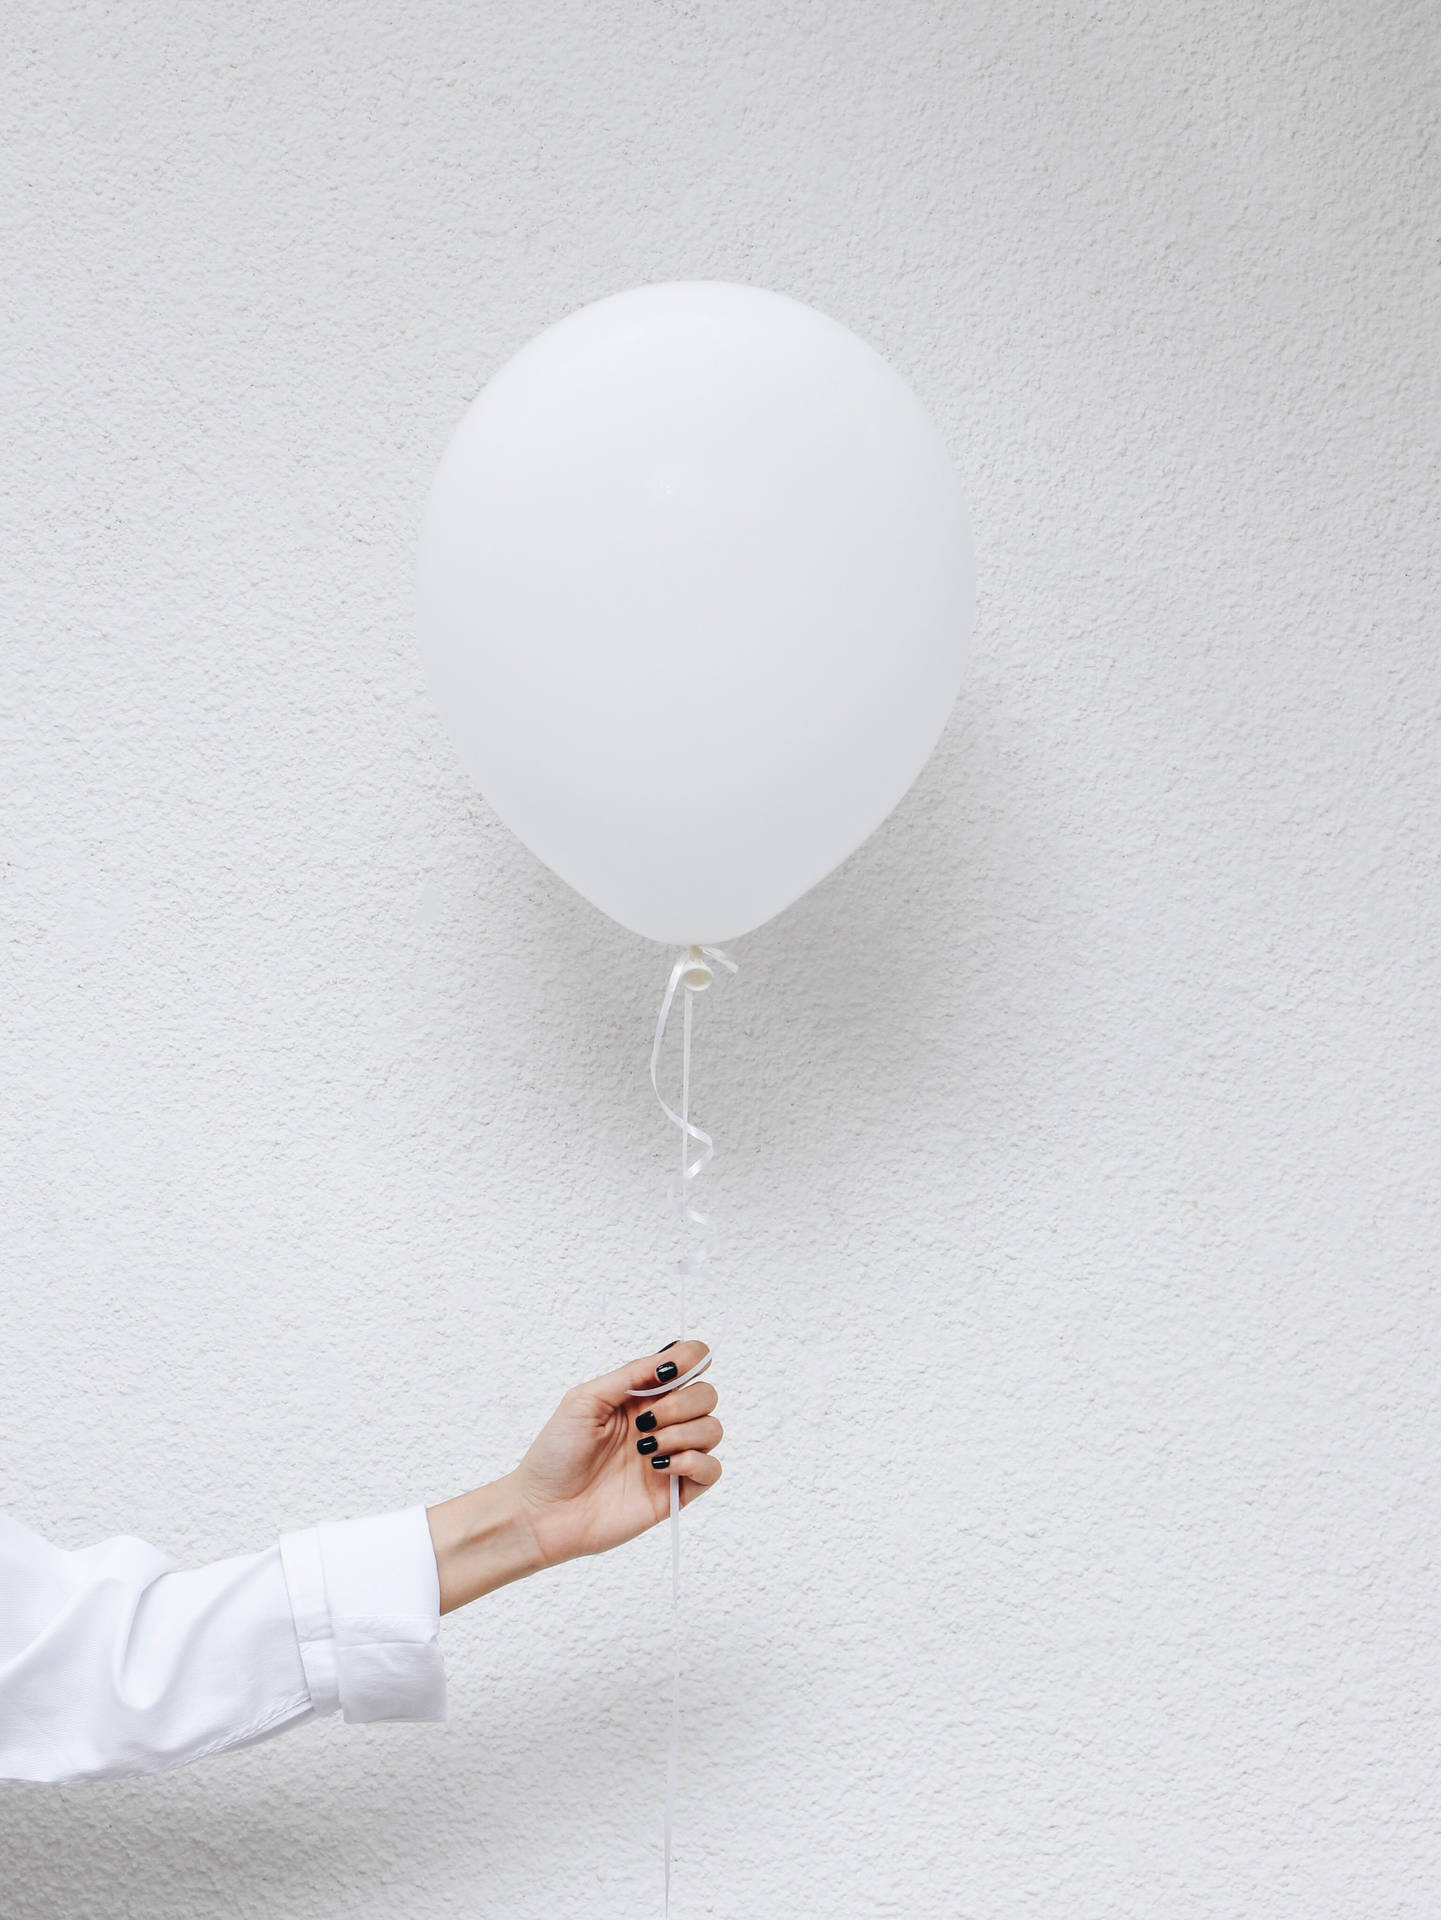 A woman's hand holding a white balloon - Balloons